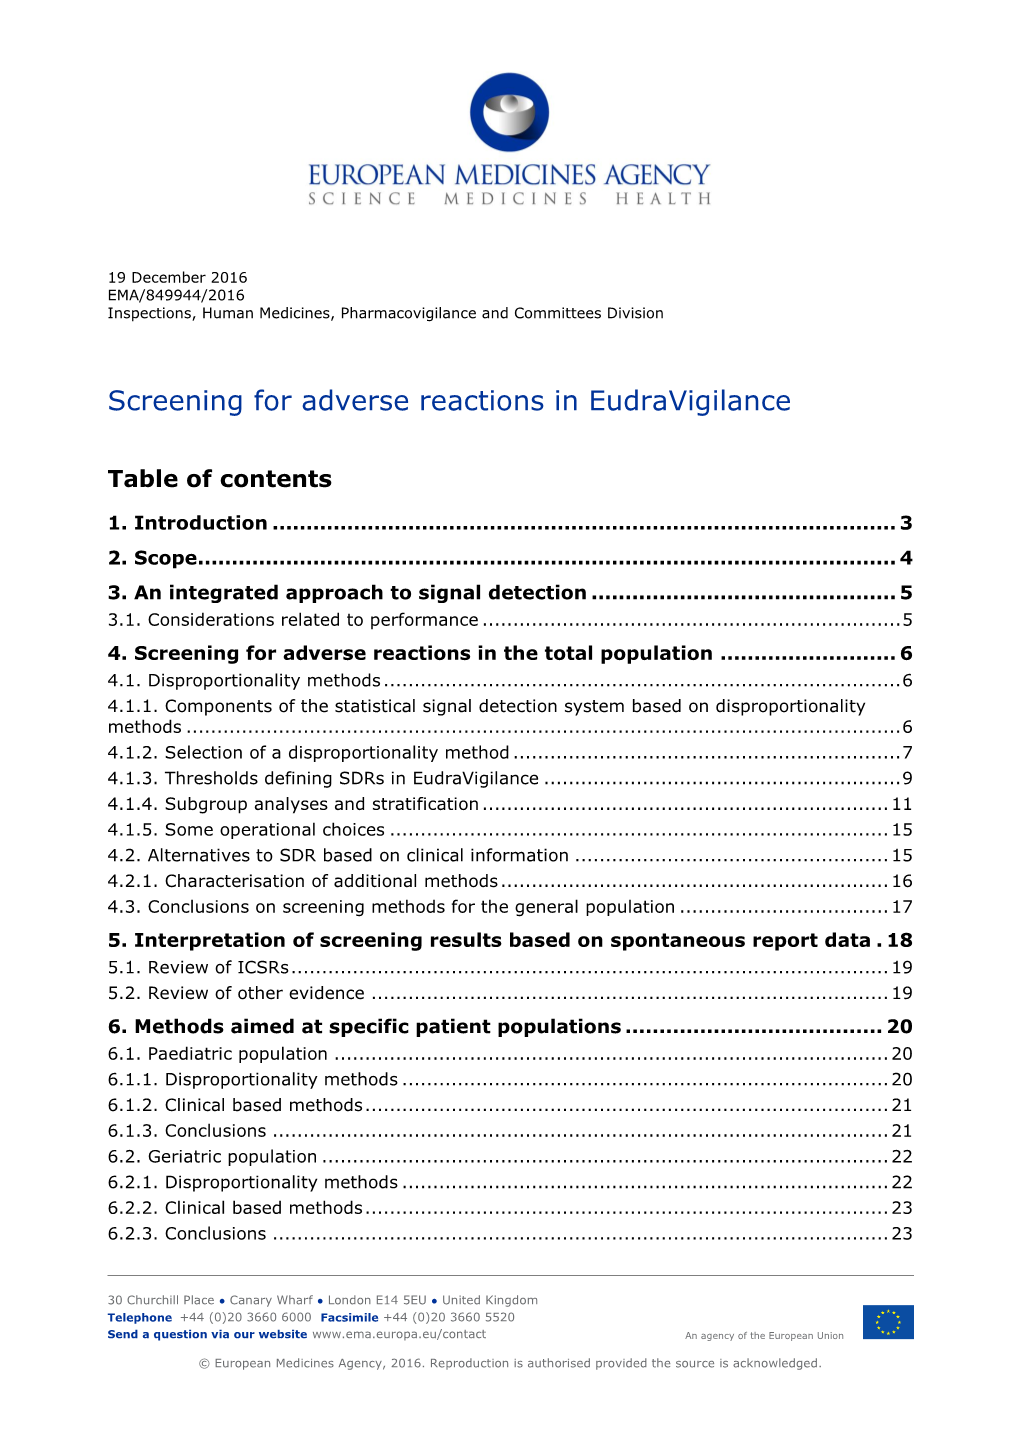 Screening for Adverse Reactions in Eudravigilance